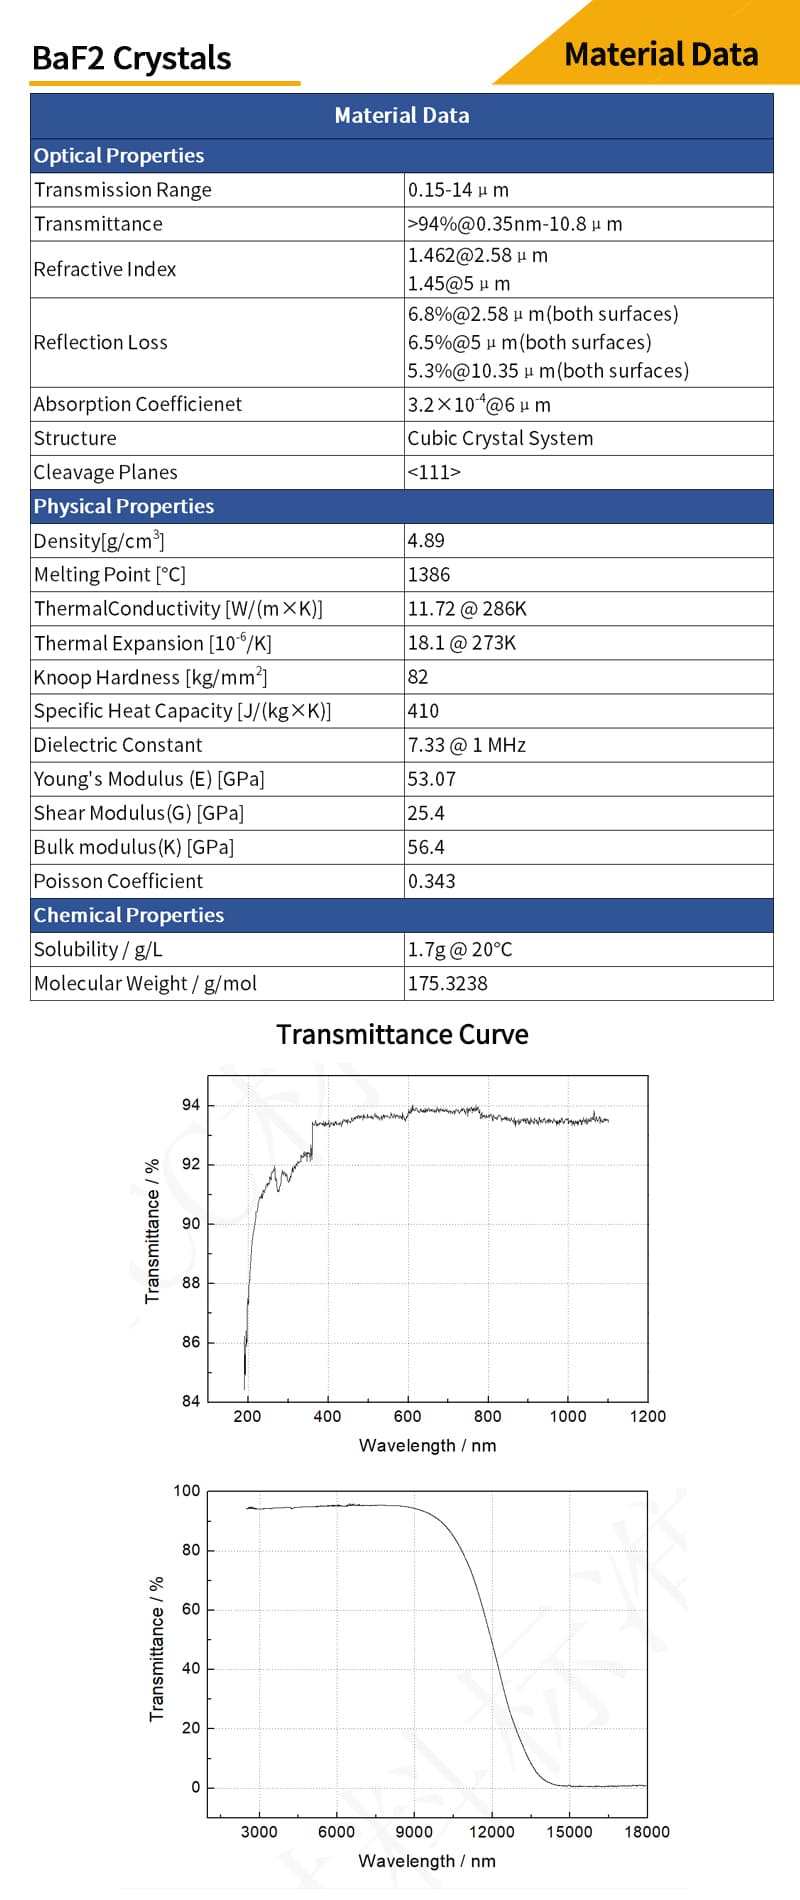 Barium Fluoride rectangular window material data and transmittance curves